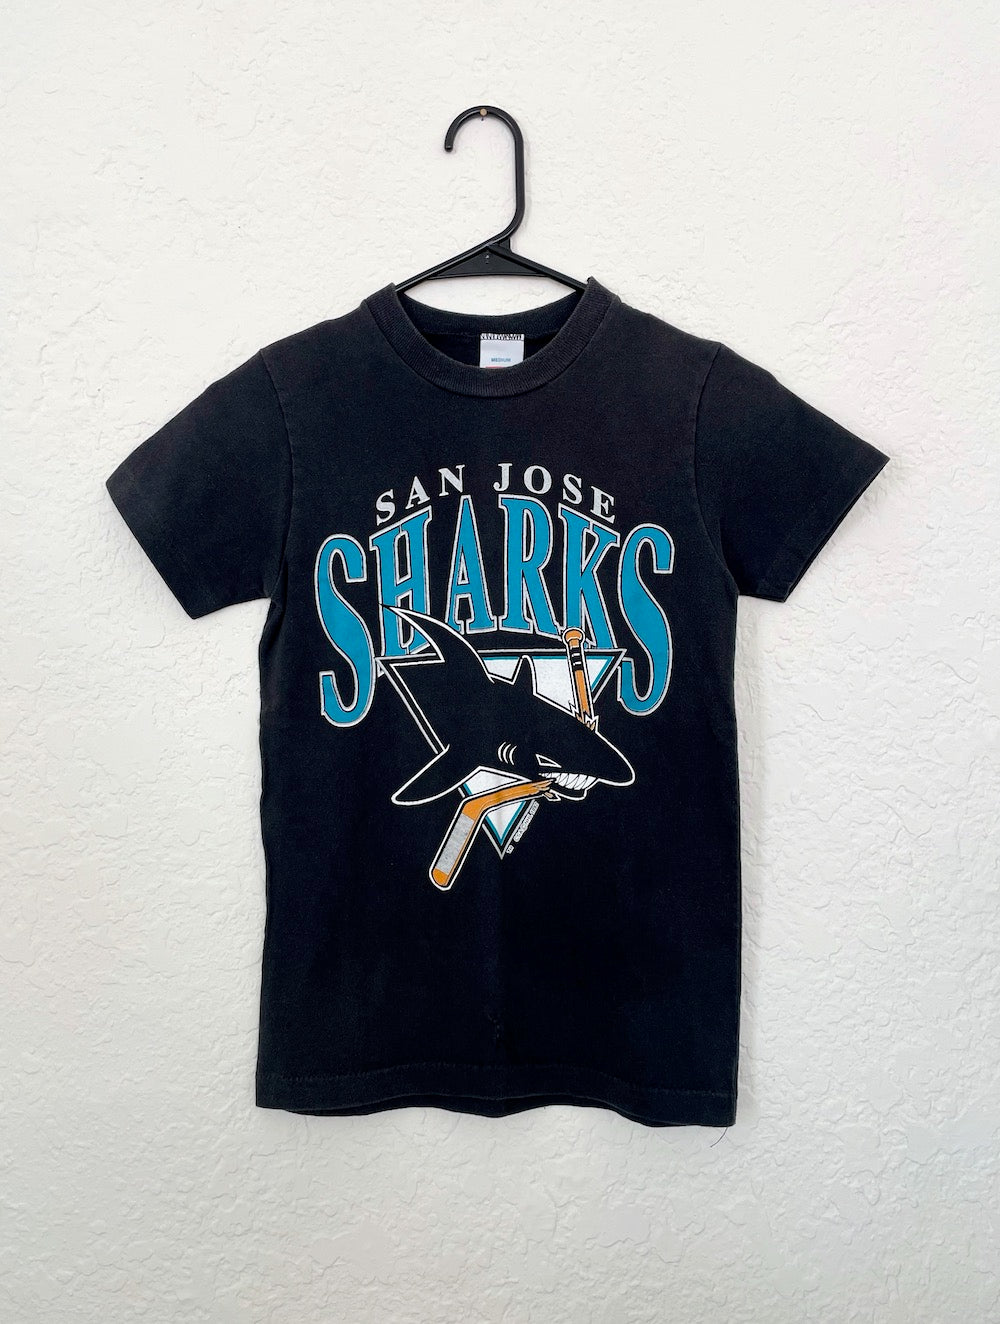 Vintage 90s San Jose Sharks Tee -- Size Extra Small nhl hockey